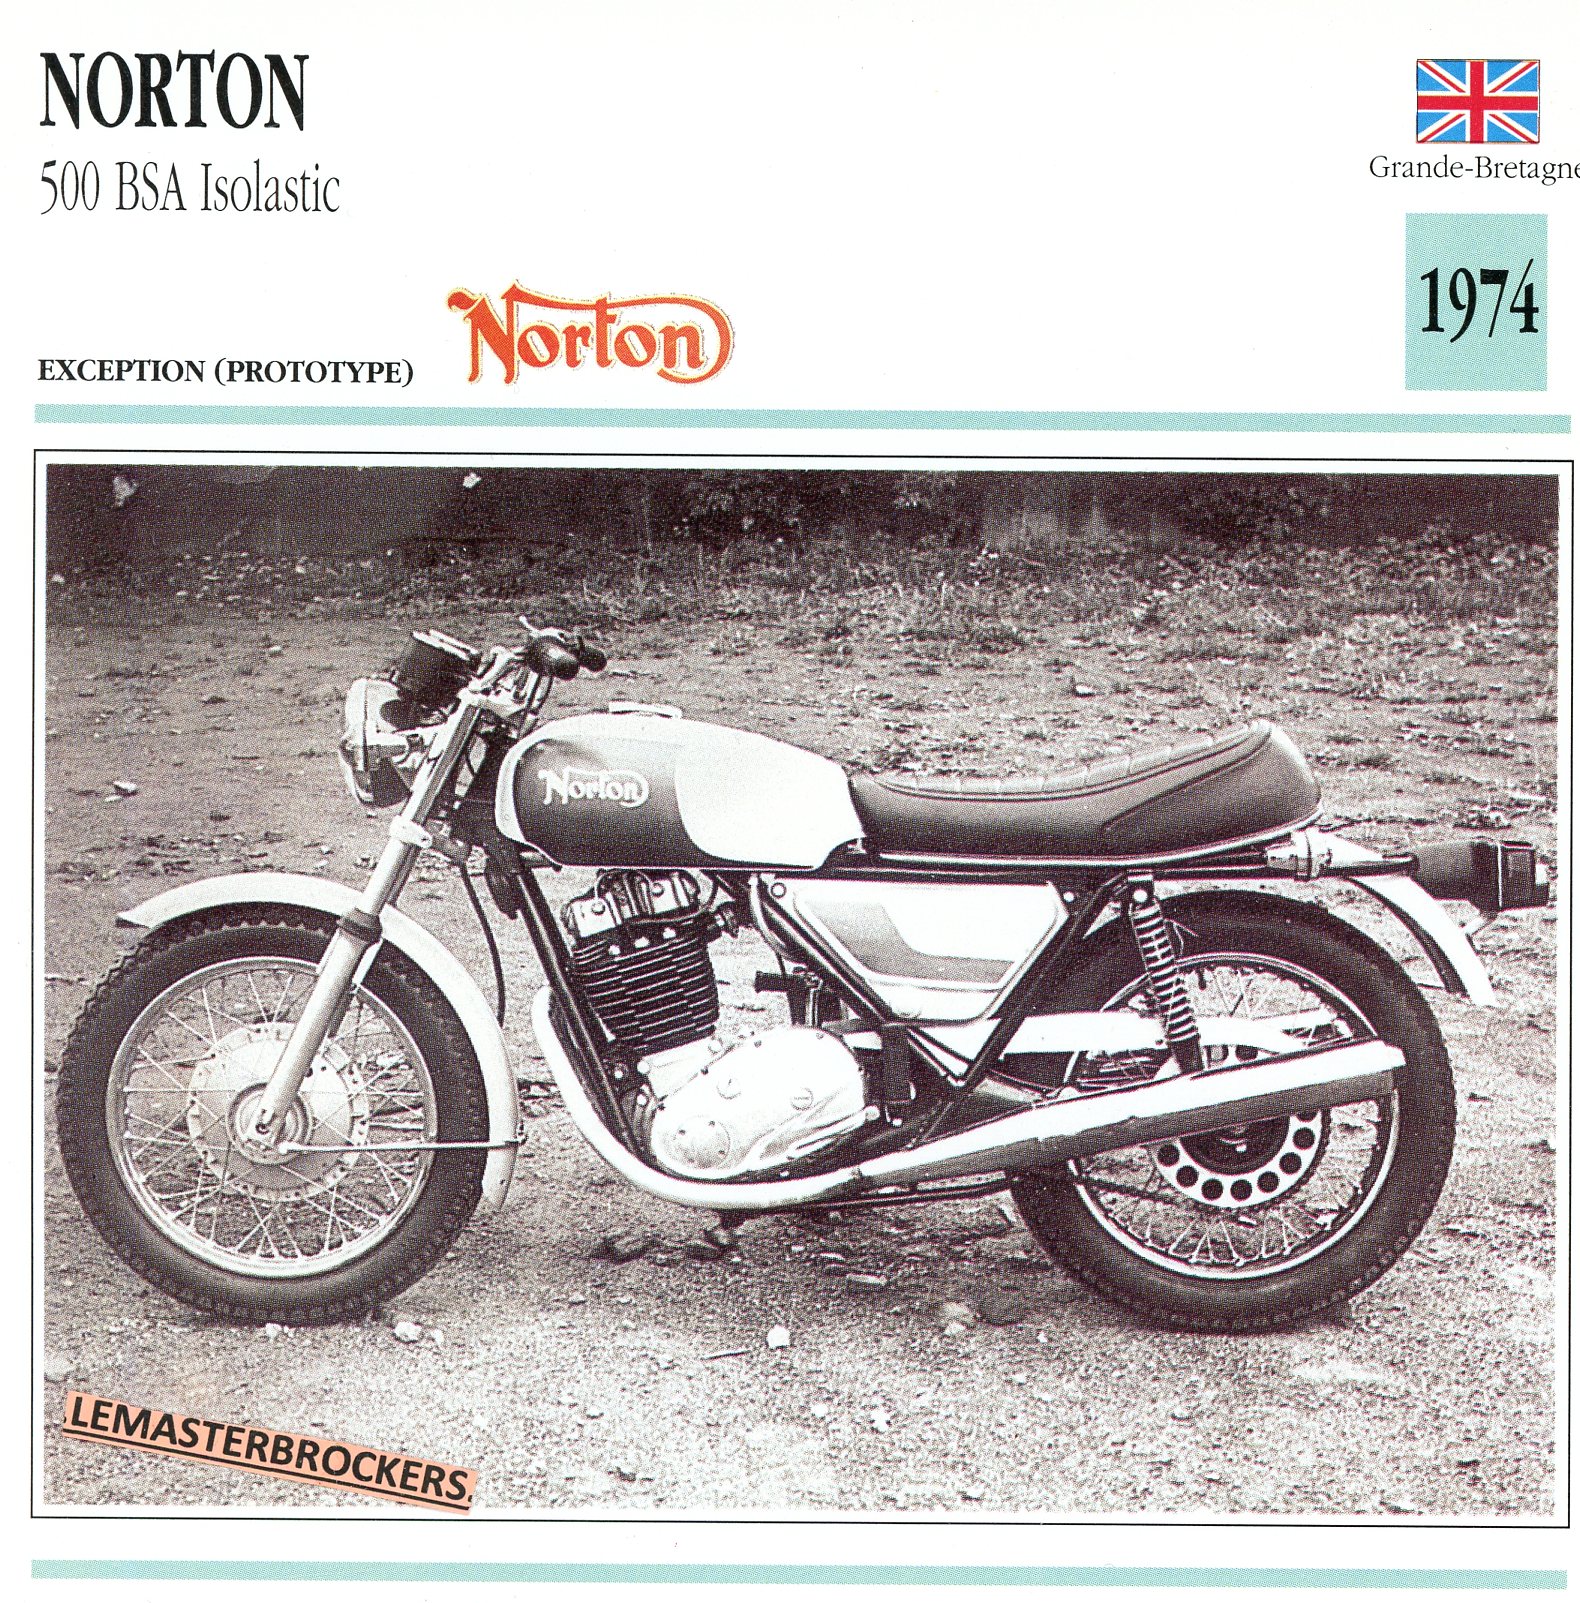 NORTON-500-BSA-ISOLASTIC-FICHE-MOTO-ATLAS-lemasterbrockers-CARD-MOTORCYCLE